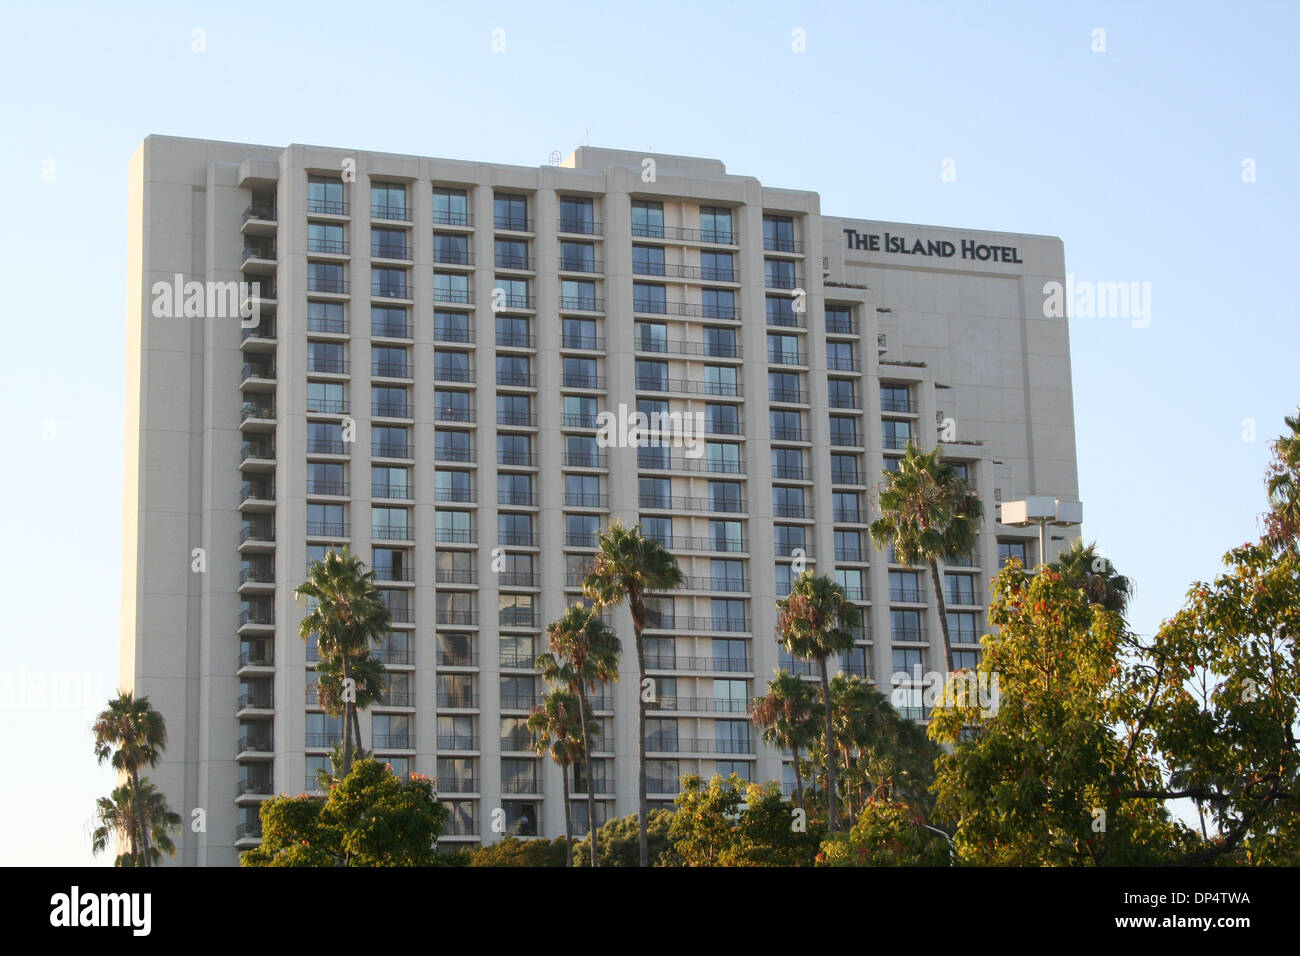 Fashion Island Hotel Newport Beach in Newport Beach, California